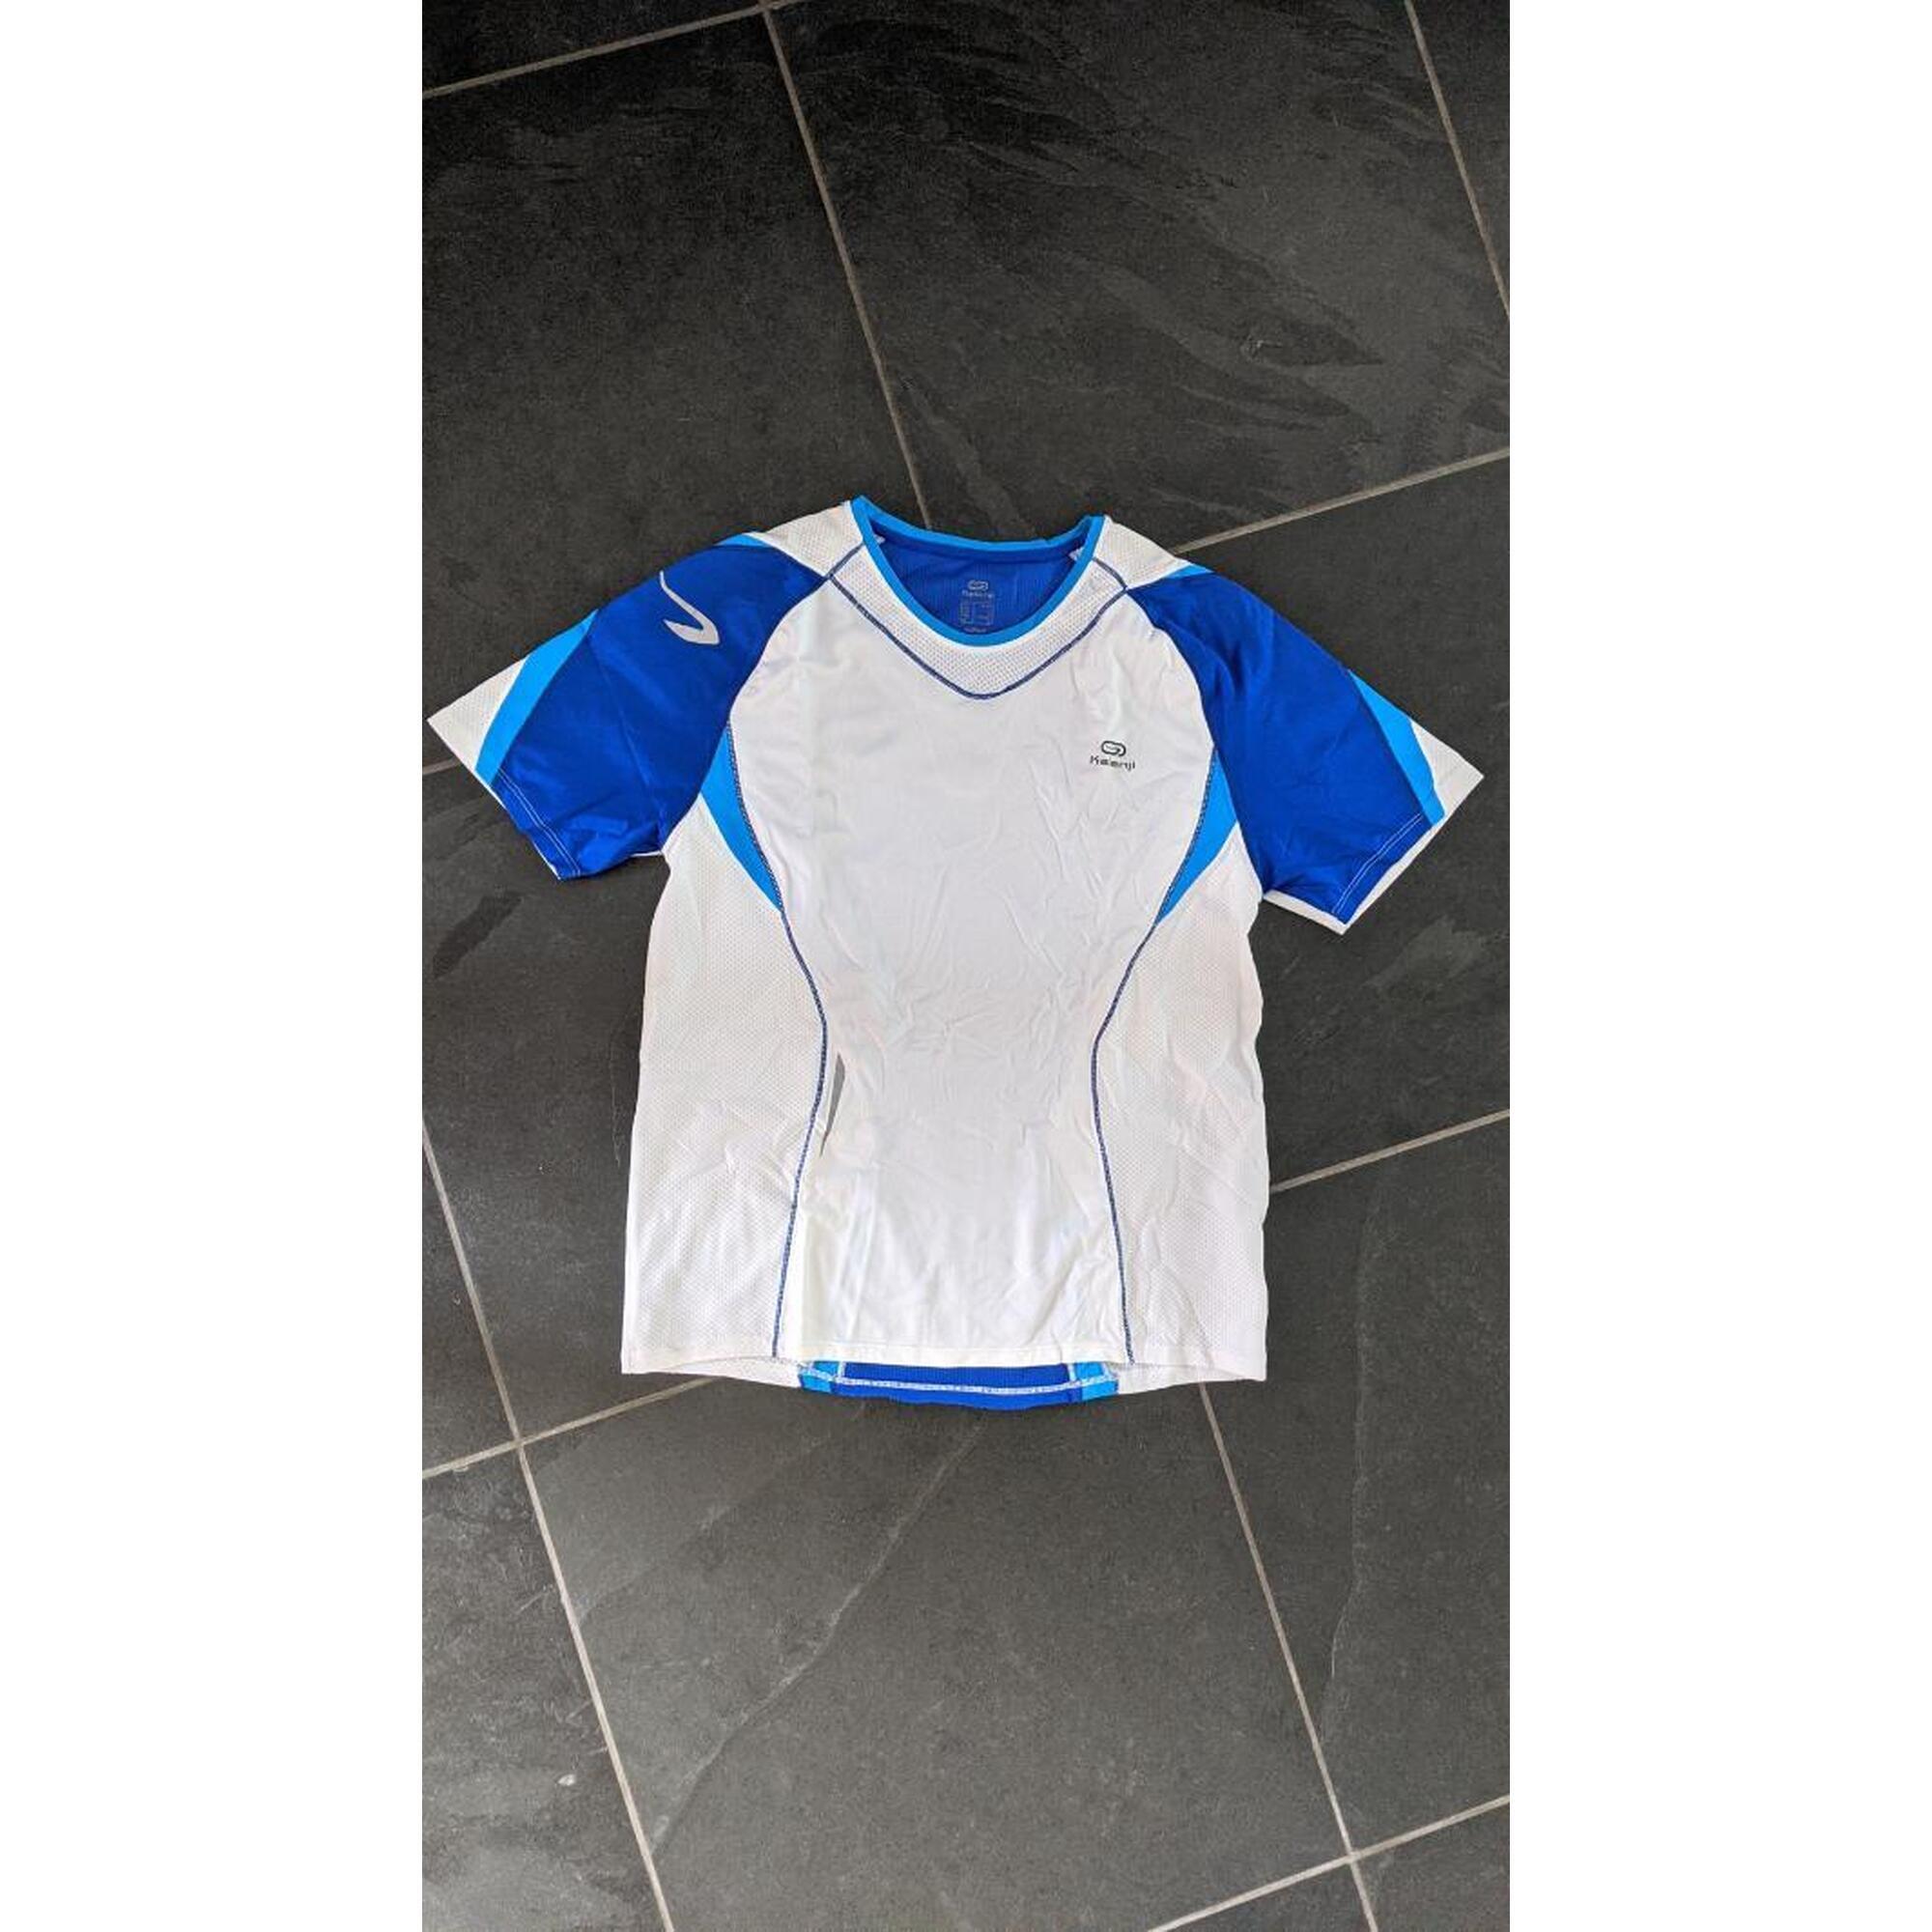 C2C - T-shirt de course Kalenji performance blanc-bleu clair